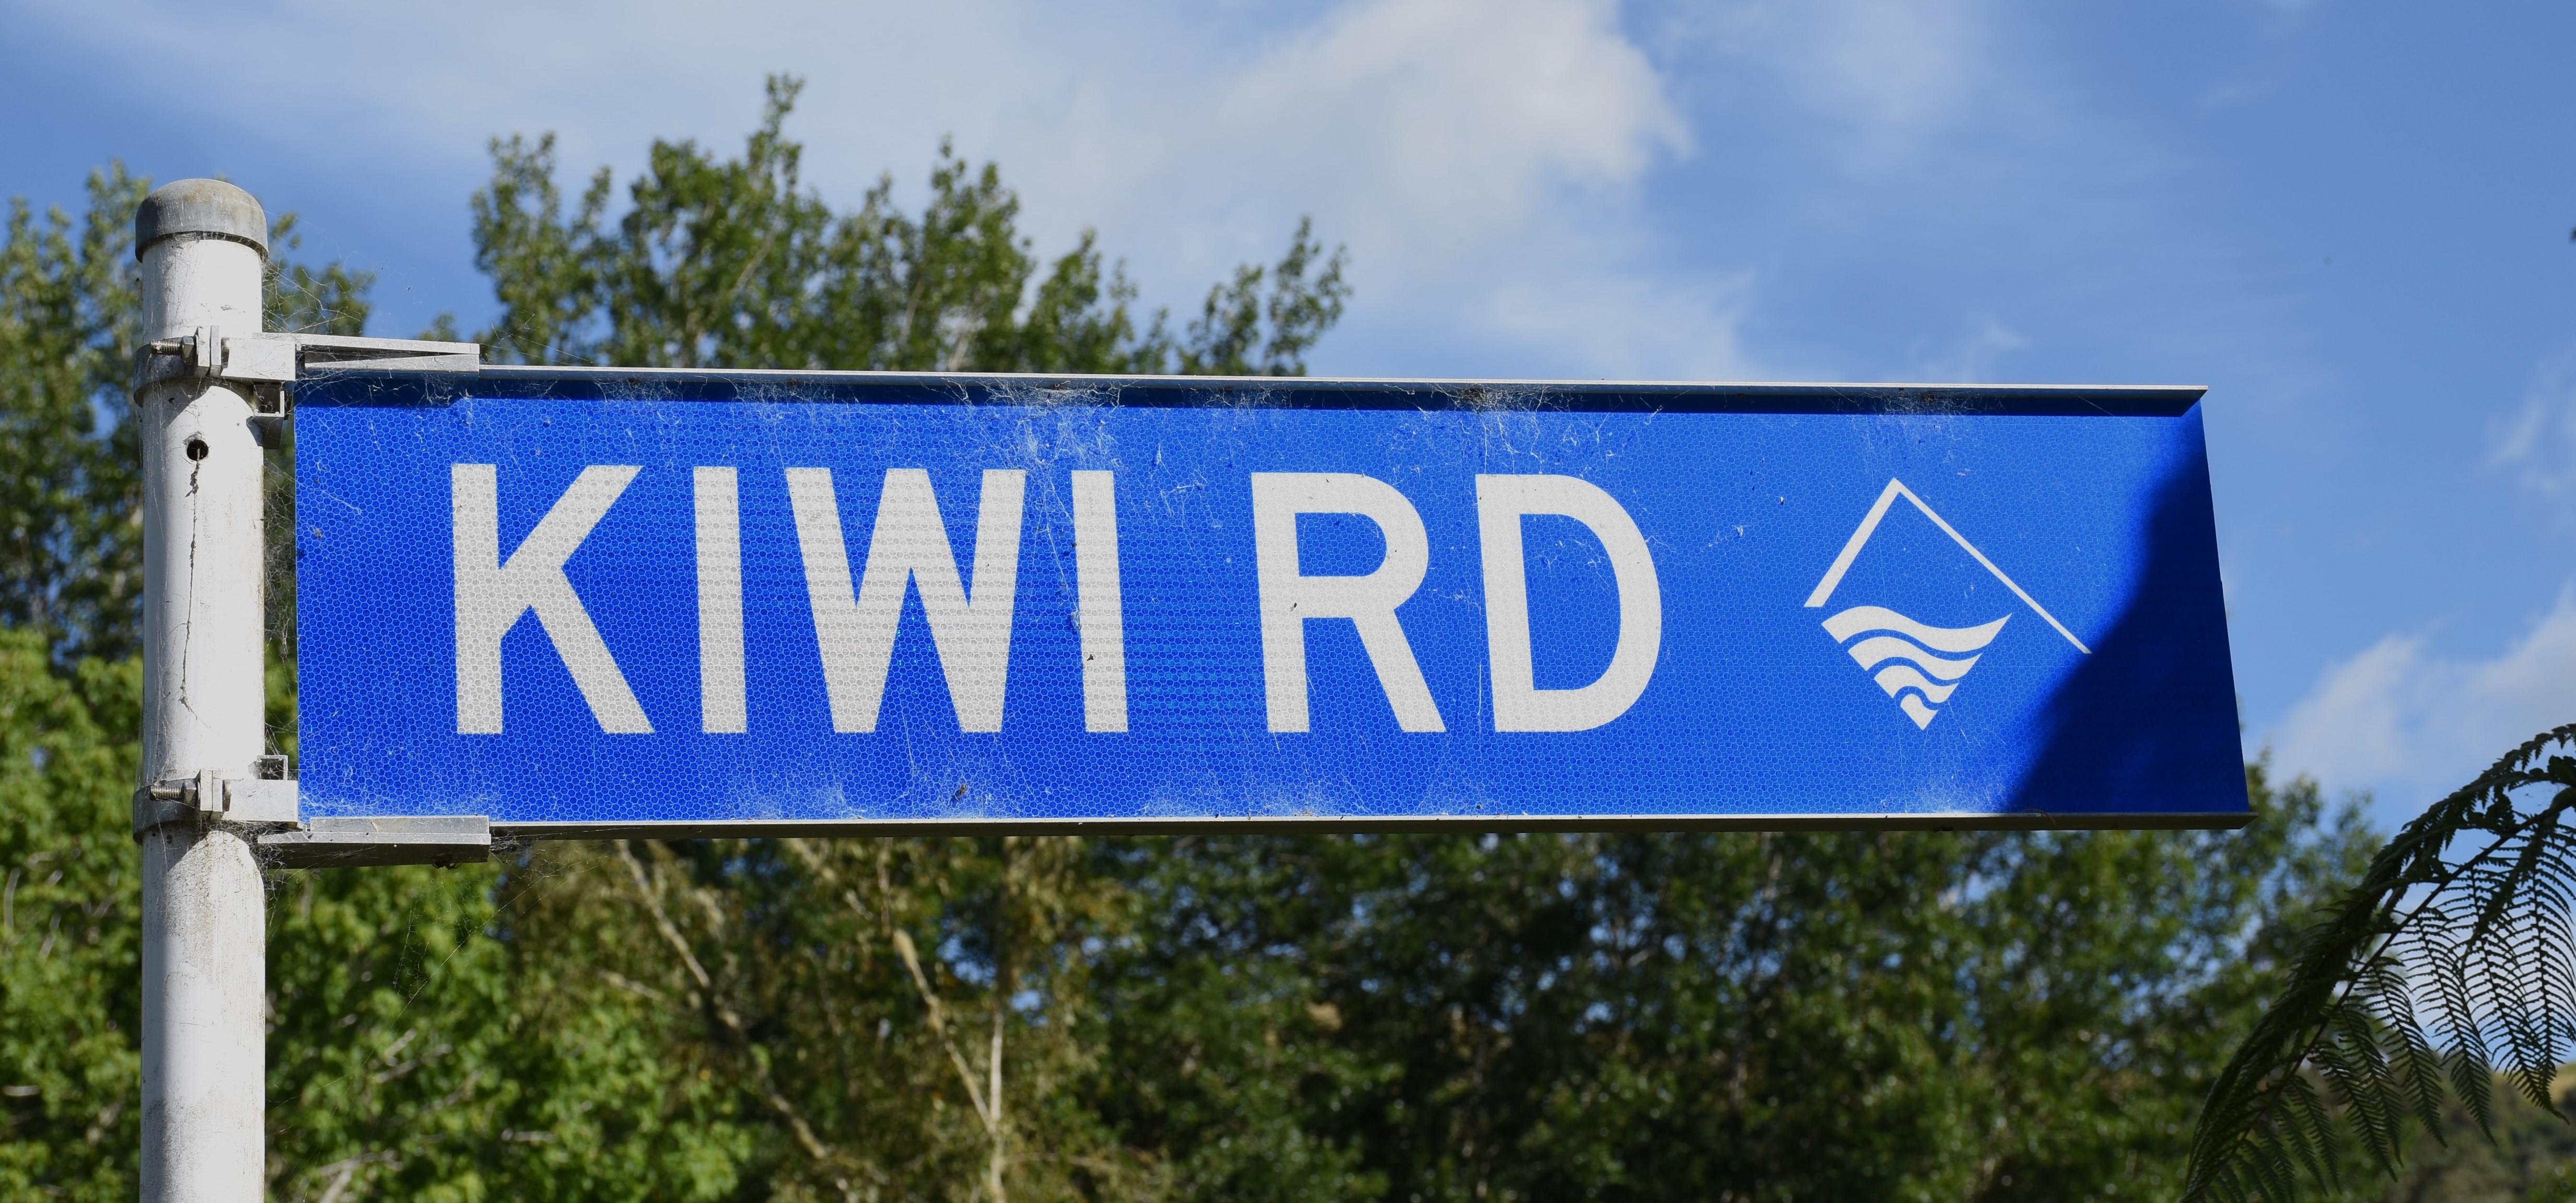 Kiwi Road copy for web.JPG